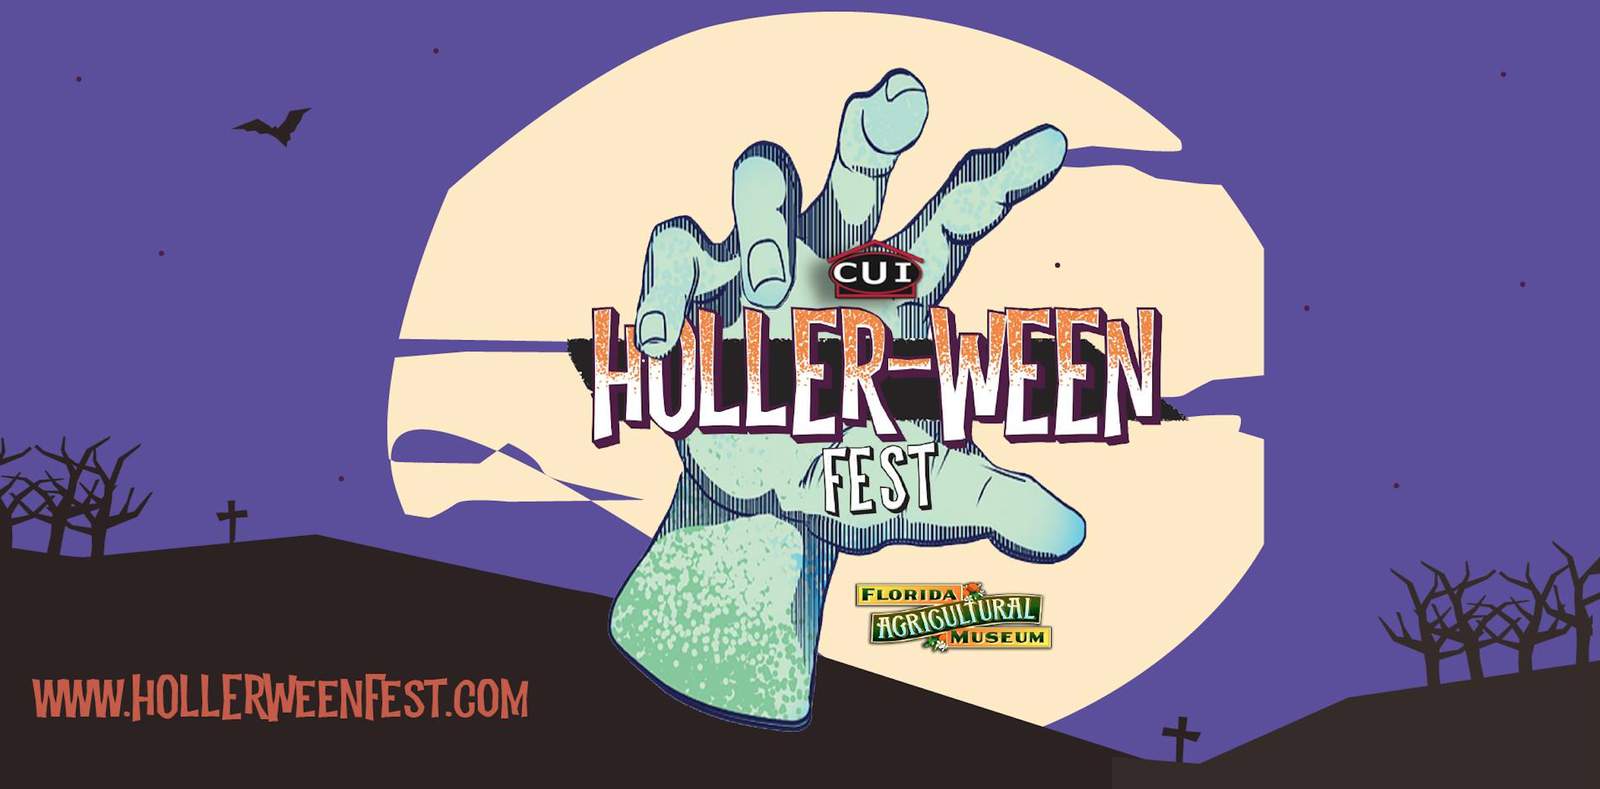 Jacksonville’s best haunted house: CUI Holler-ween Fest